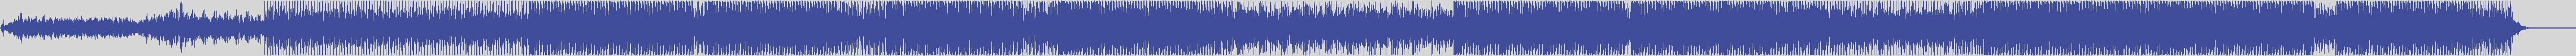 atomic_recordings [AR017] Duo - The Art Of Surprise [Original Mix] audio wave form